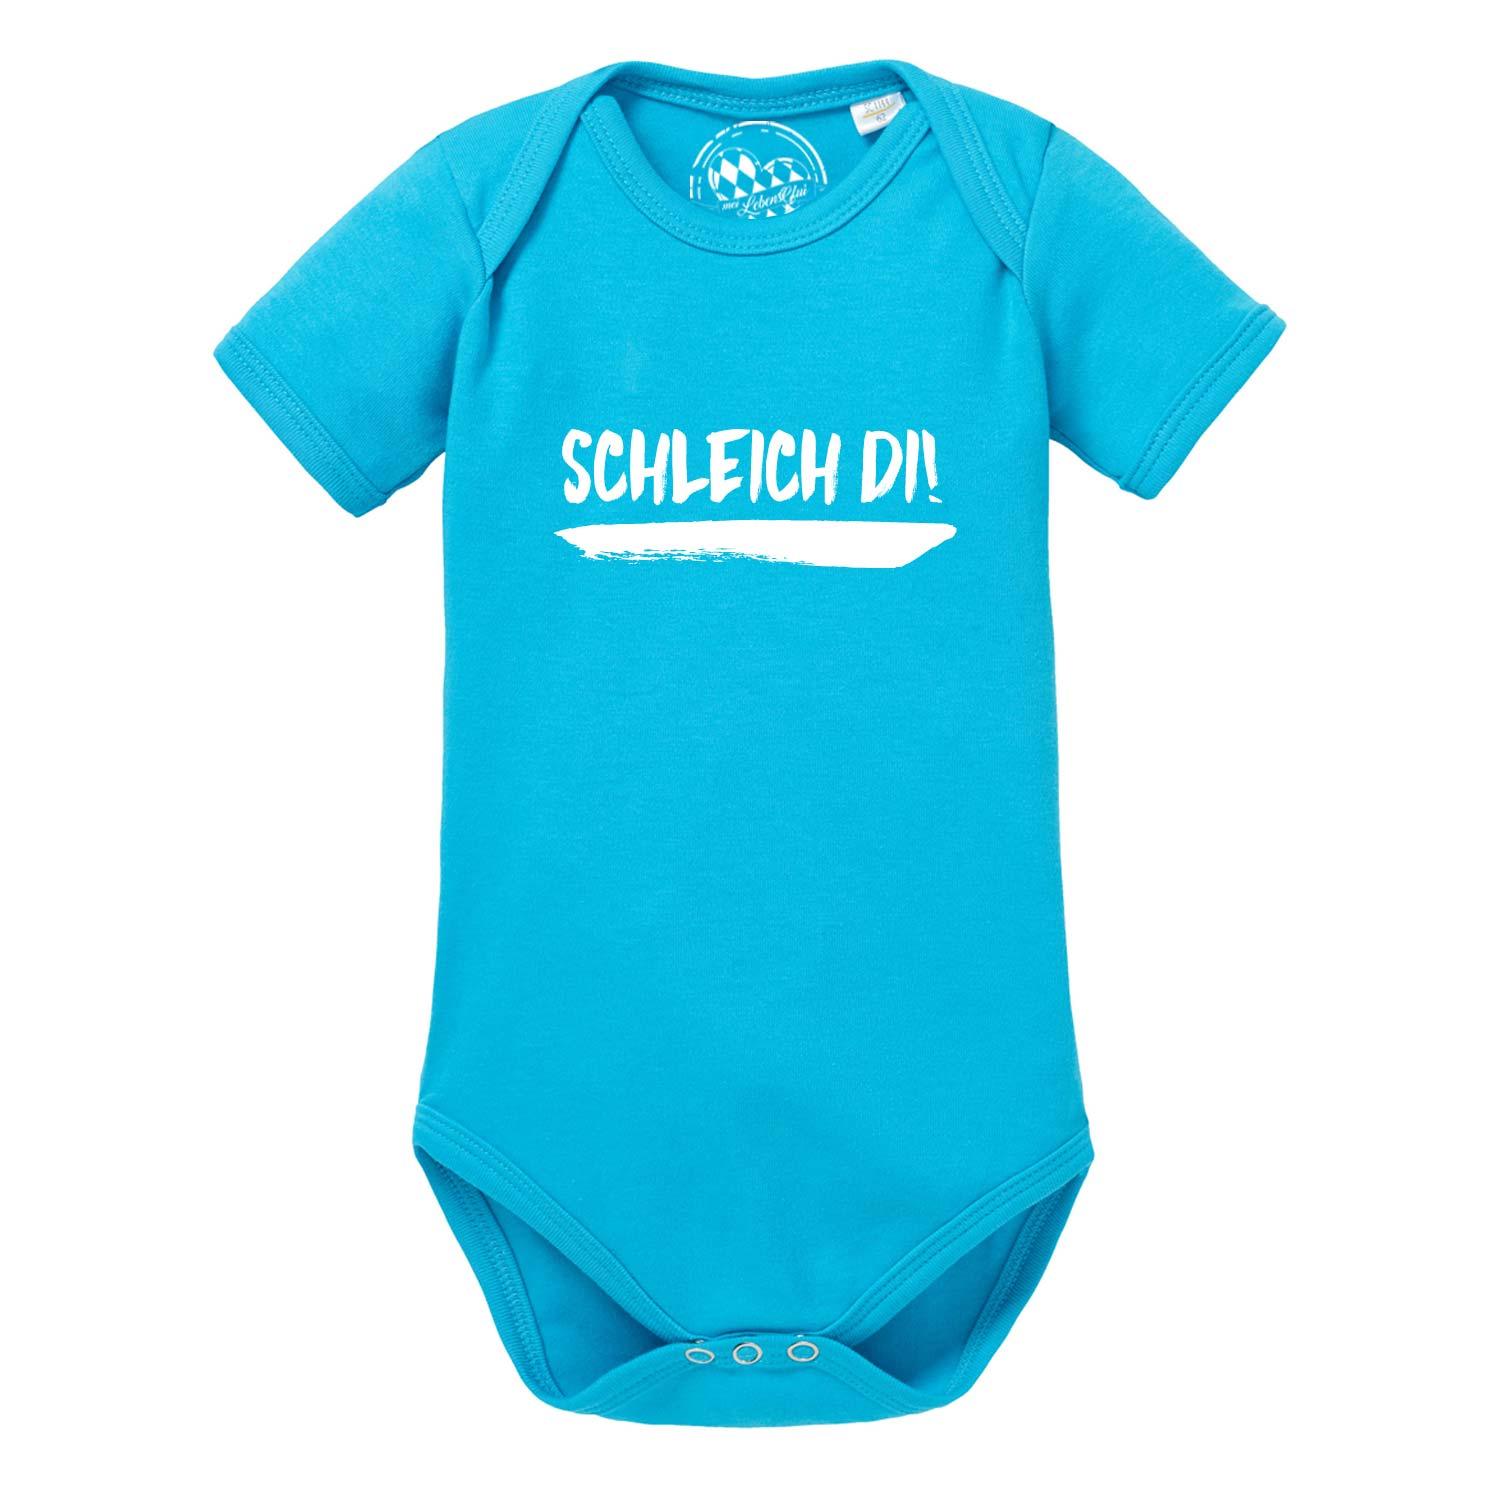 Baby Body "Schleich di!" - bavariashop - mei LebensGfui